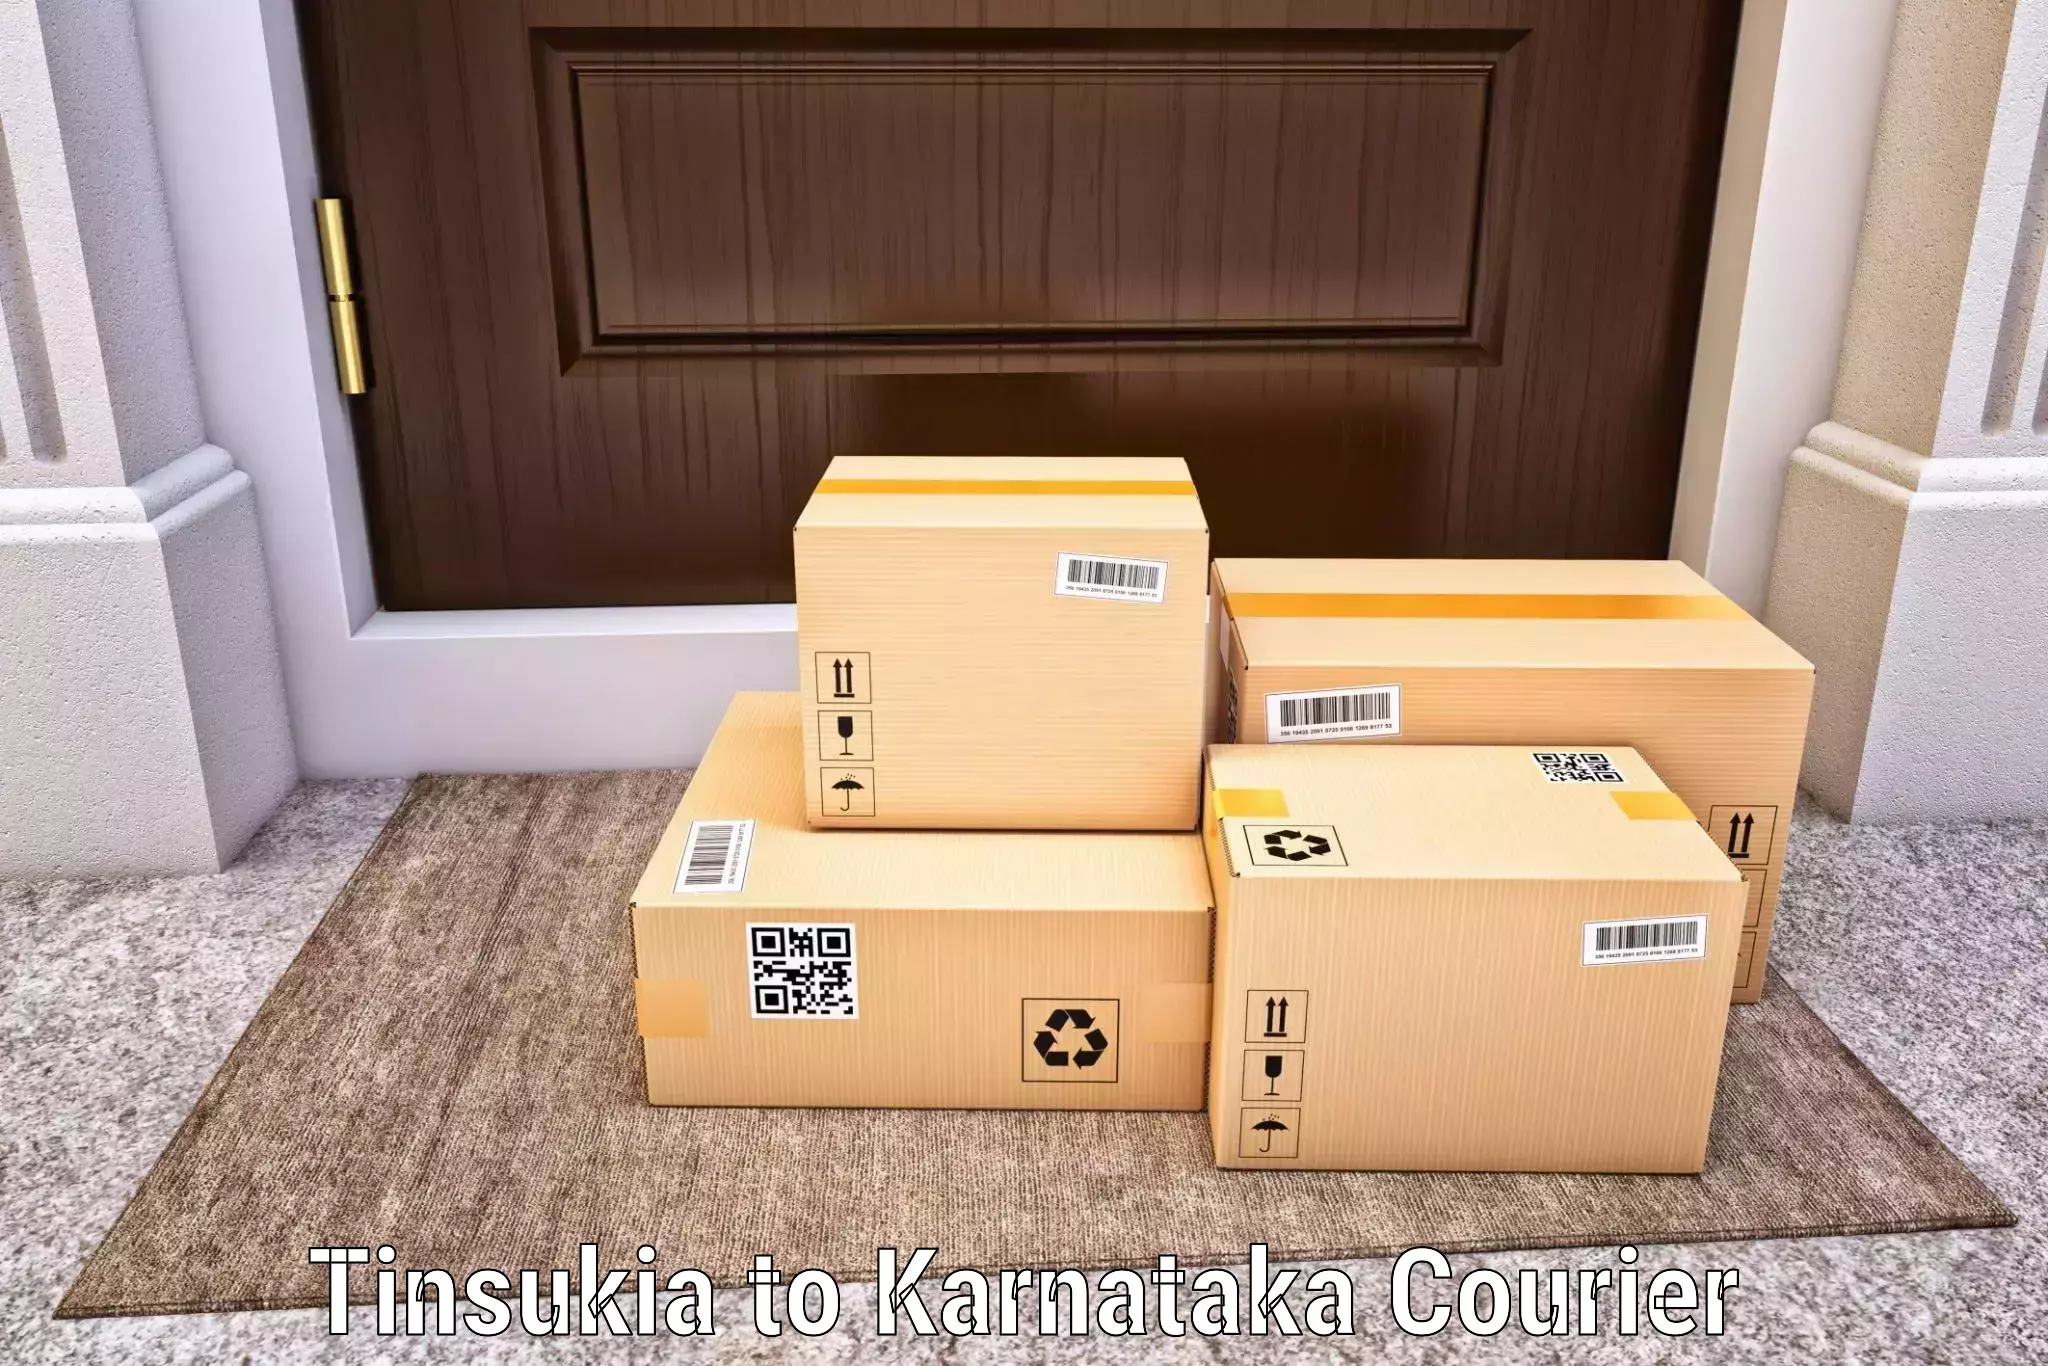 Sustainable courier practices Tinsukia to Ramanathapura